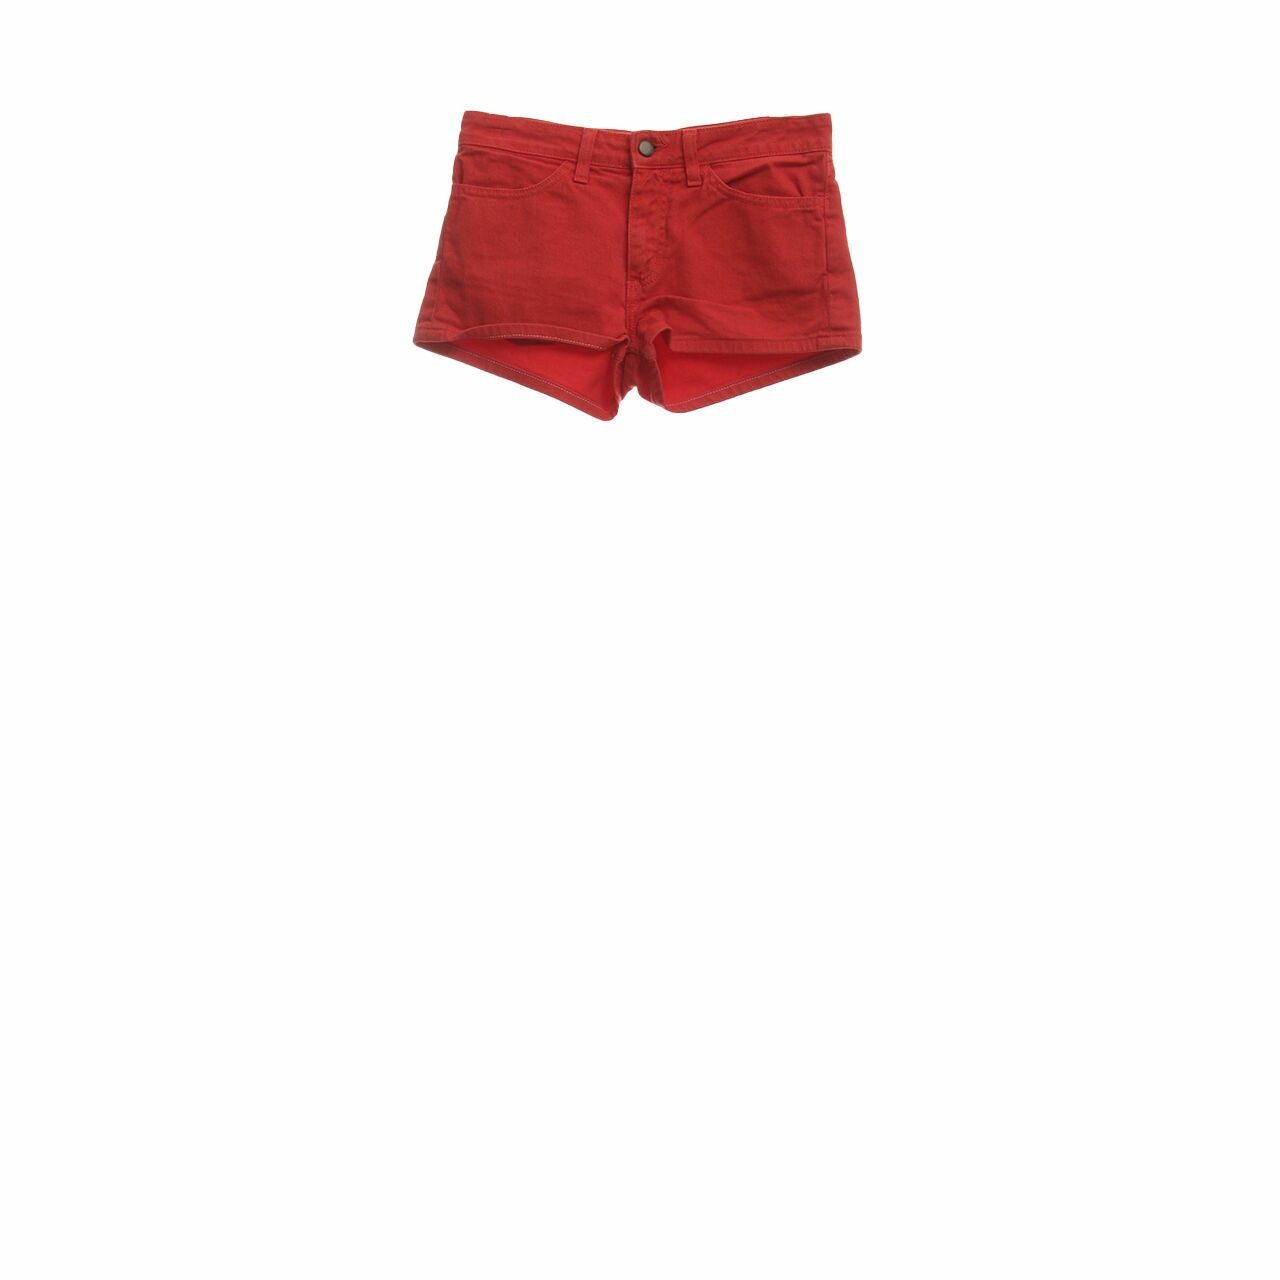 American Apparel Red Short Pants